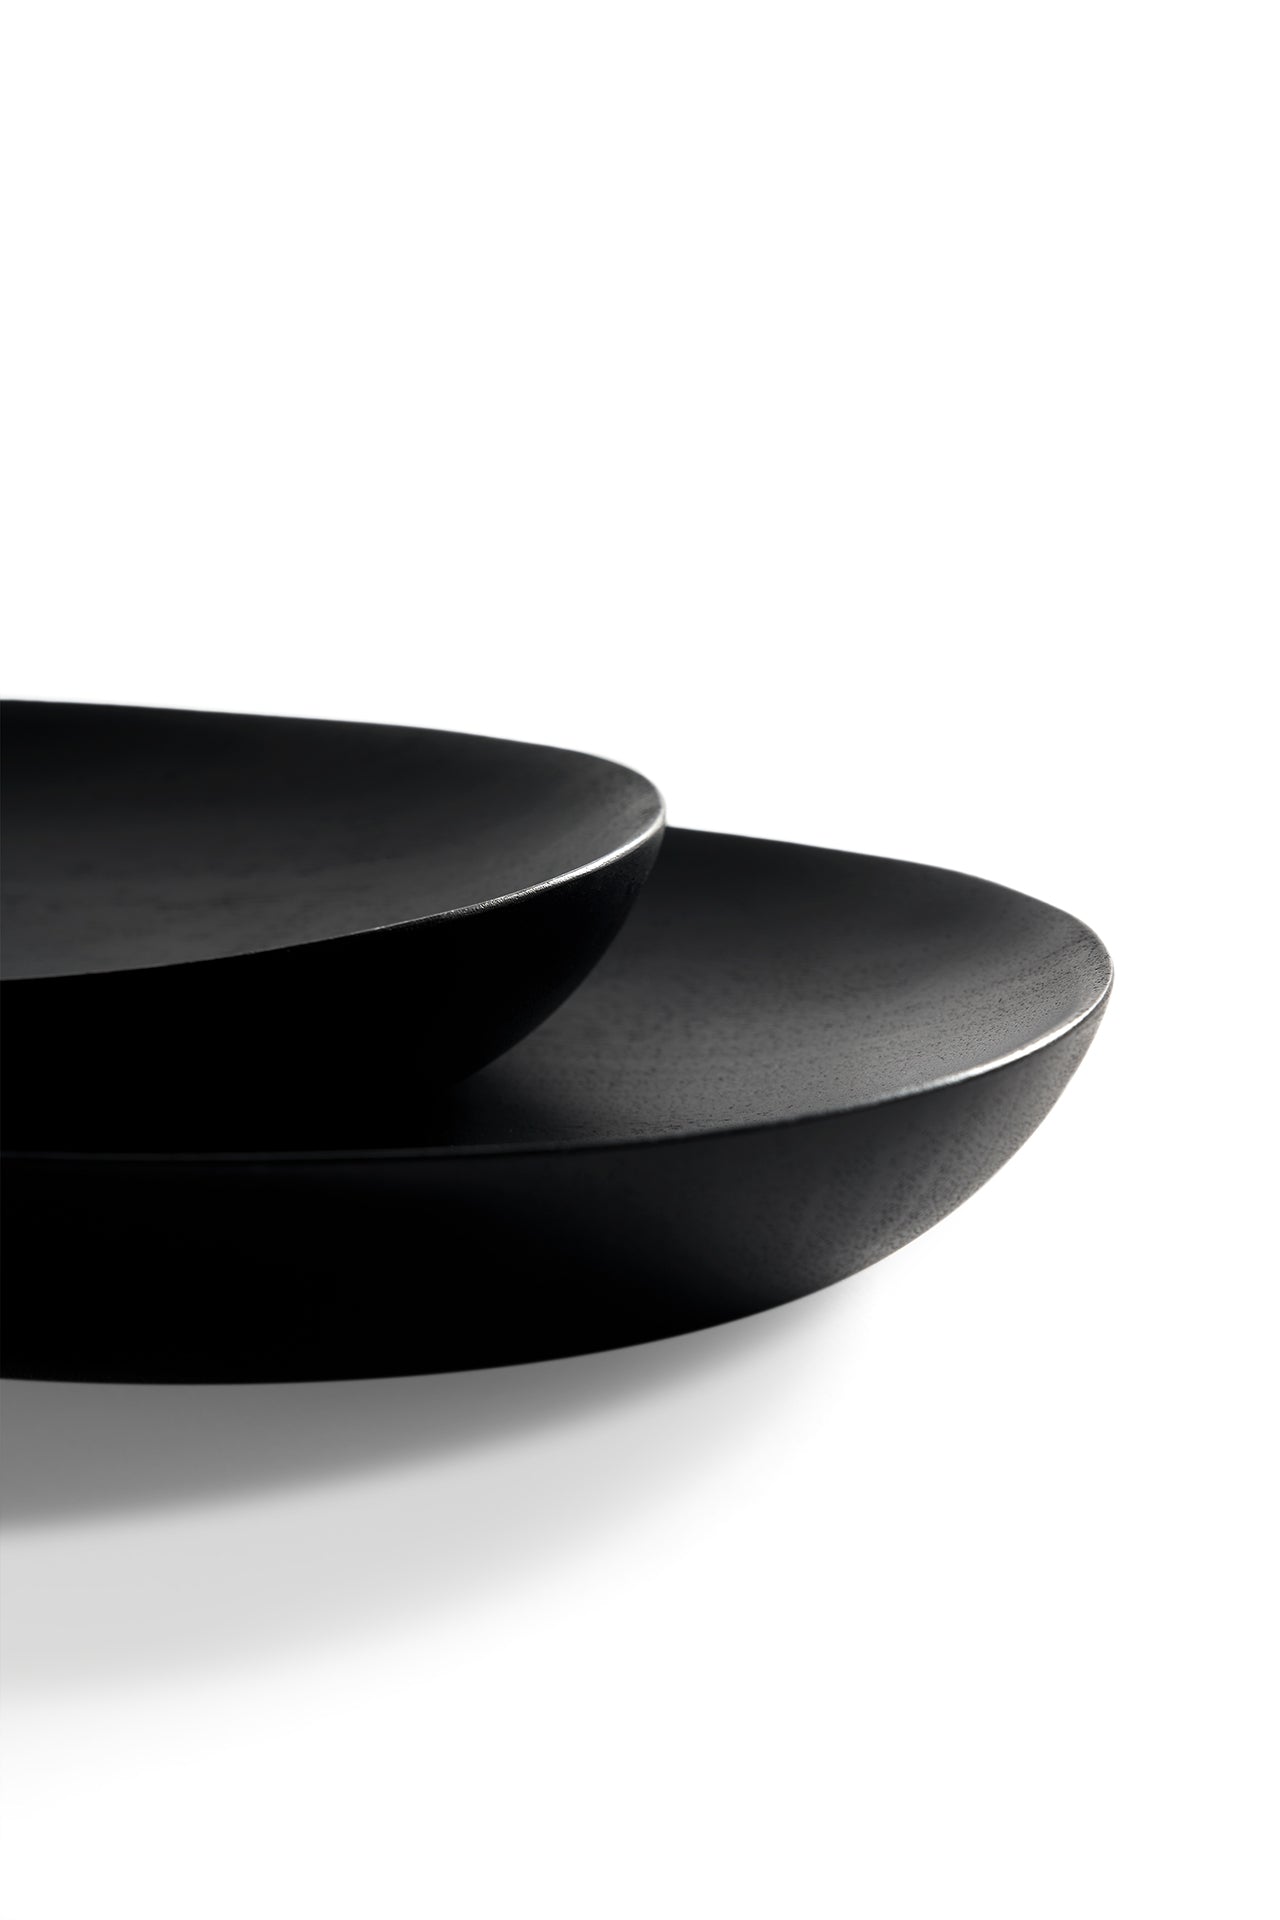 Thin Oval boards set - black